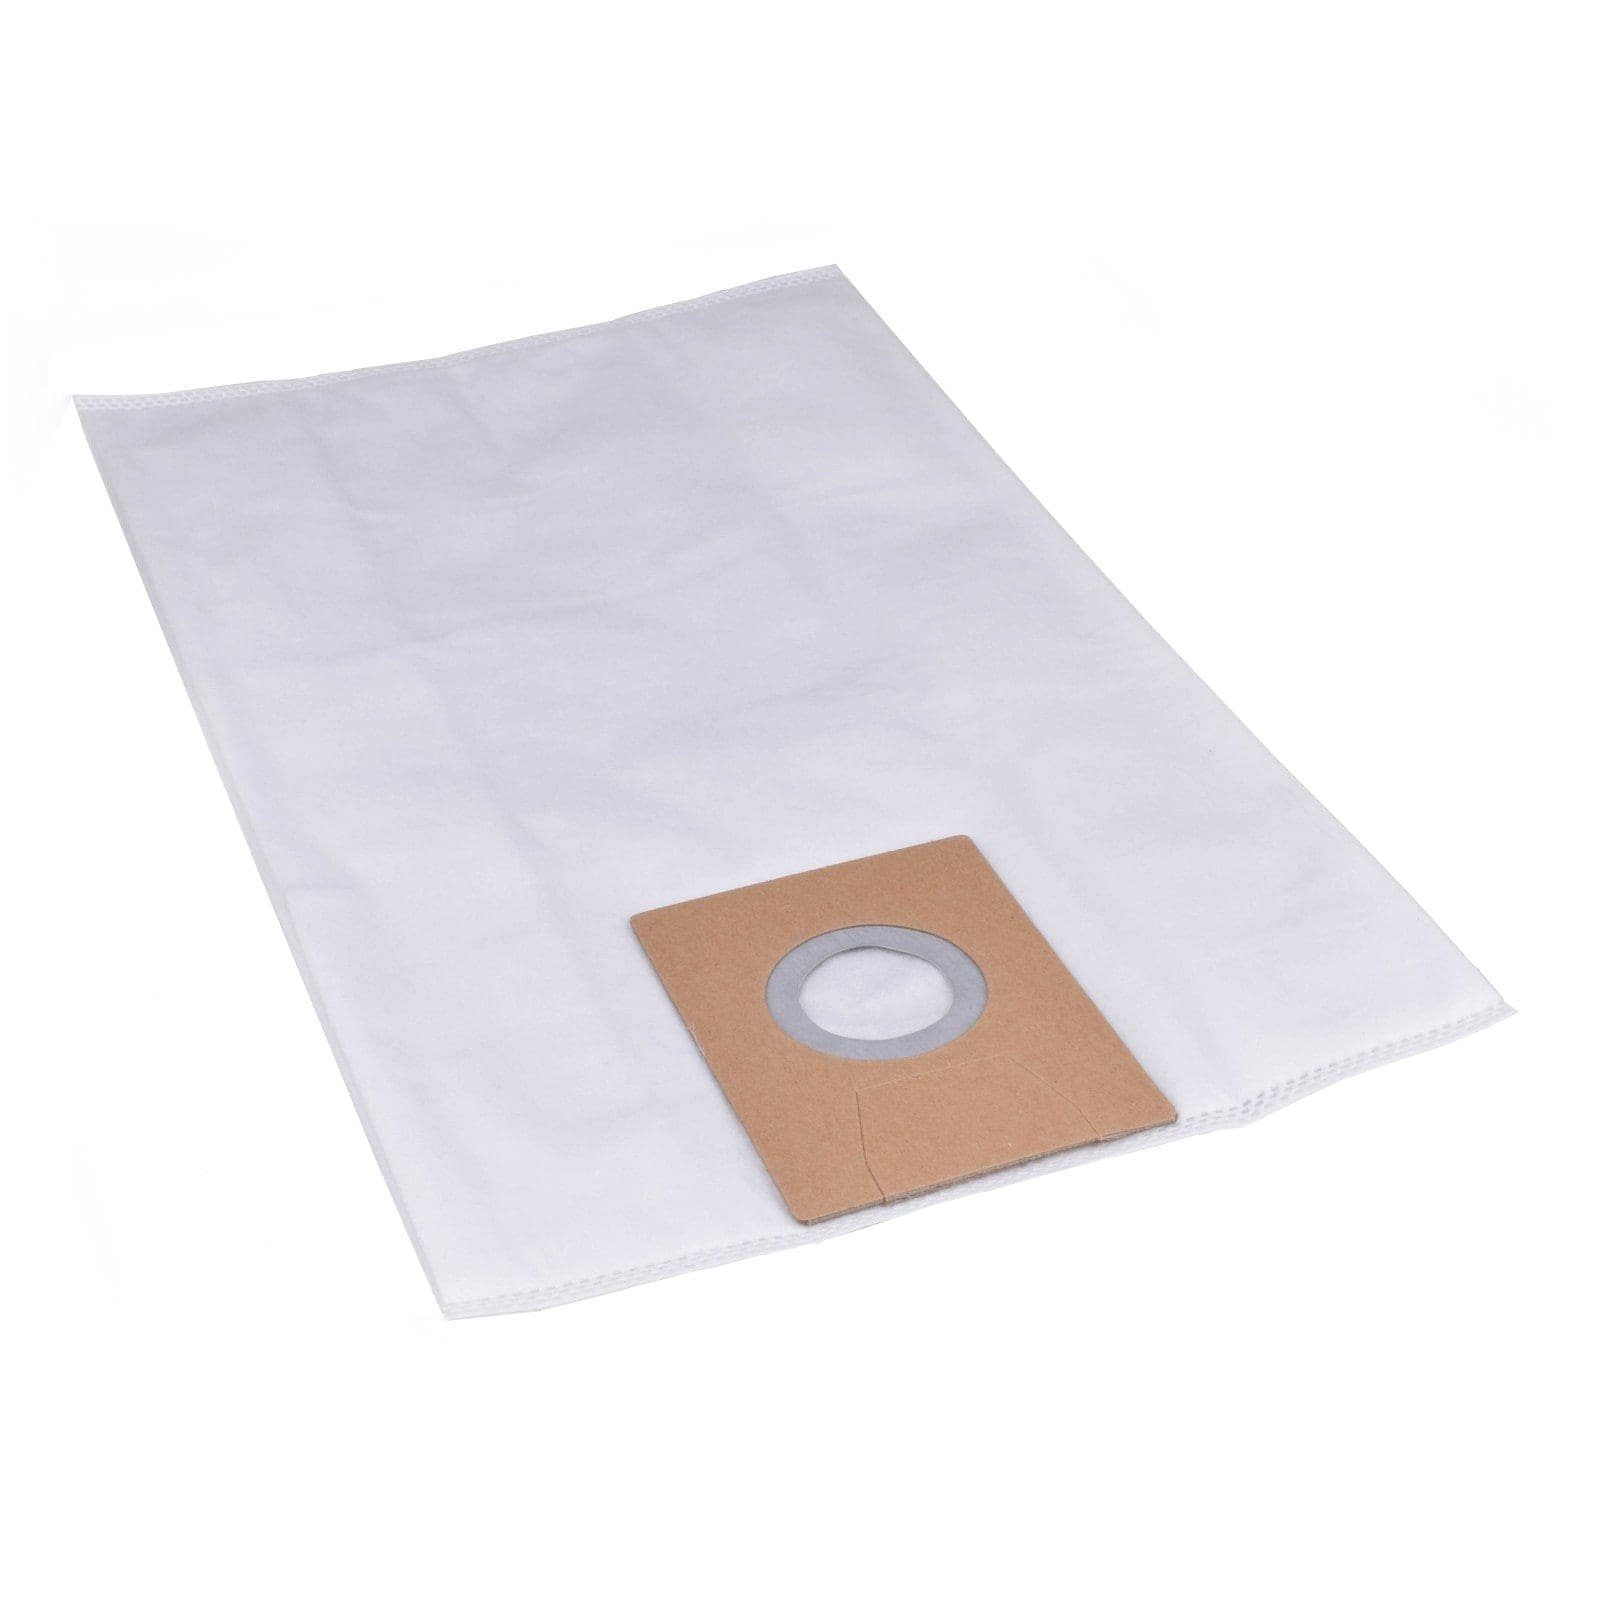 Reinica Staubsaugerbeutel passend Saugerbeutel Card Filtertüten Beutel la für a K103200941, Clean Staubbeutel 10er-Pack